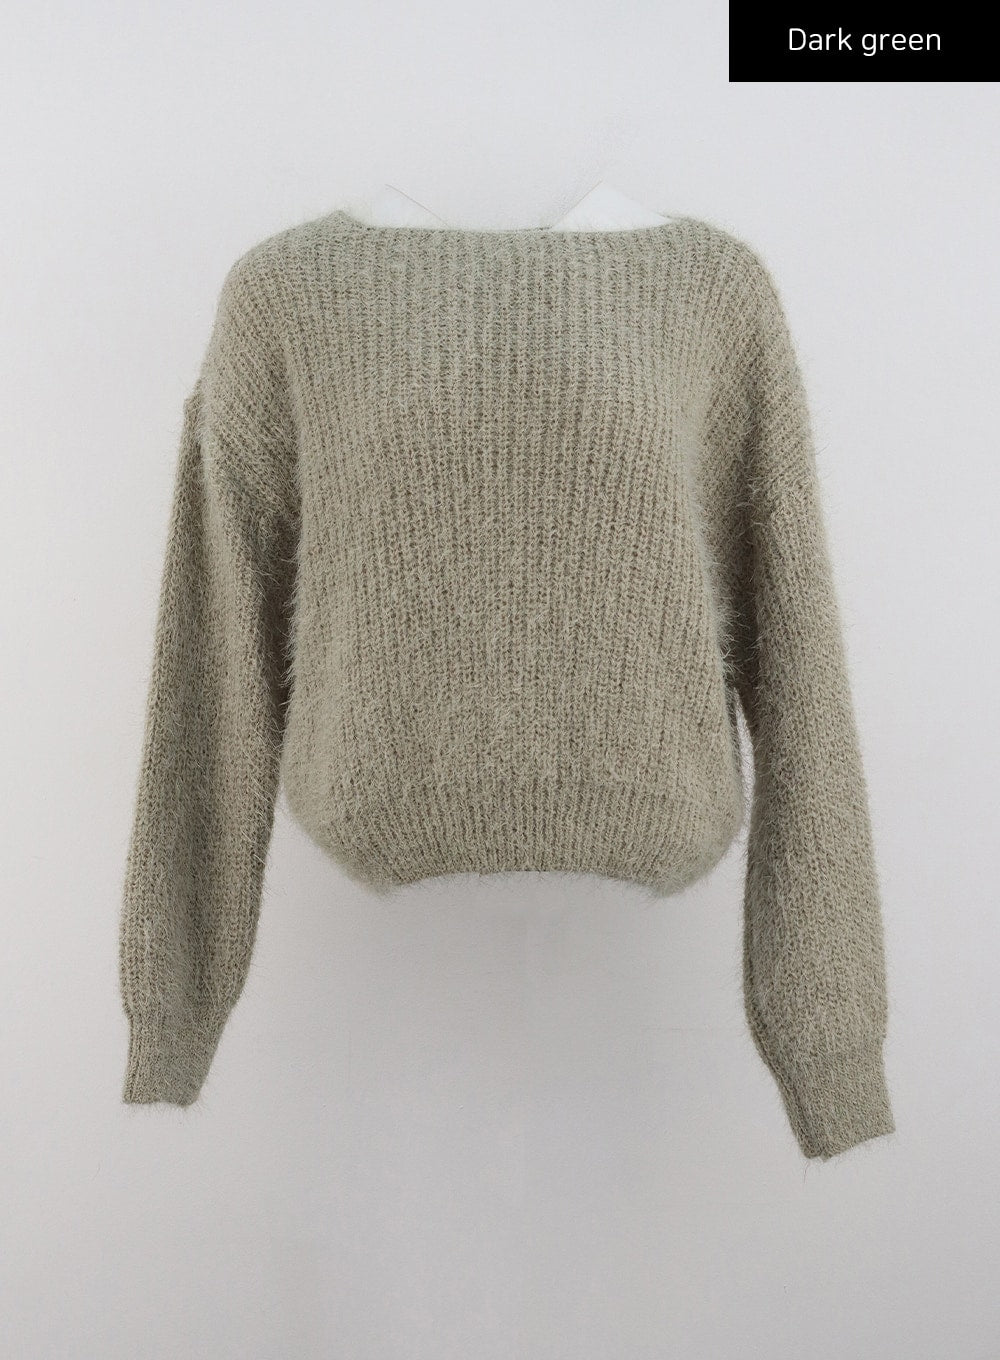 soft-boat-neck-knit-sweater-cn329 / Dark green